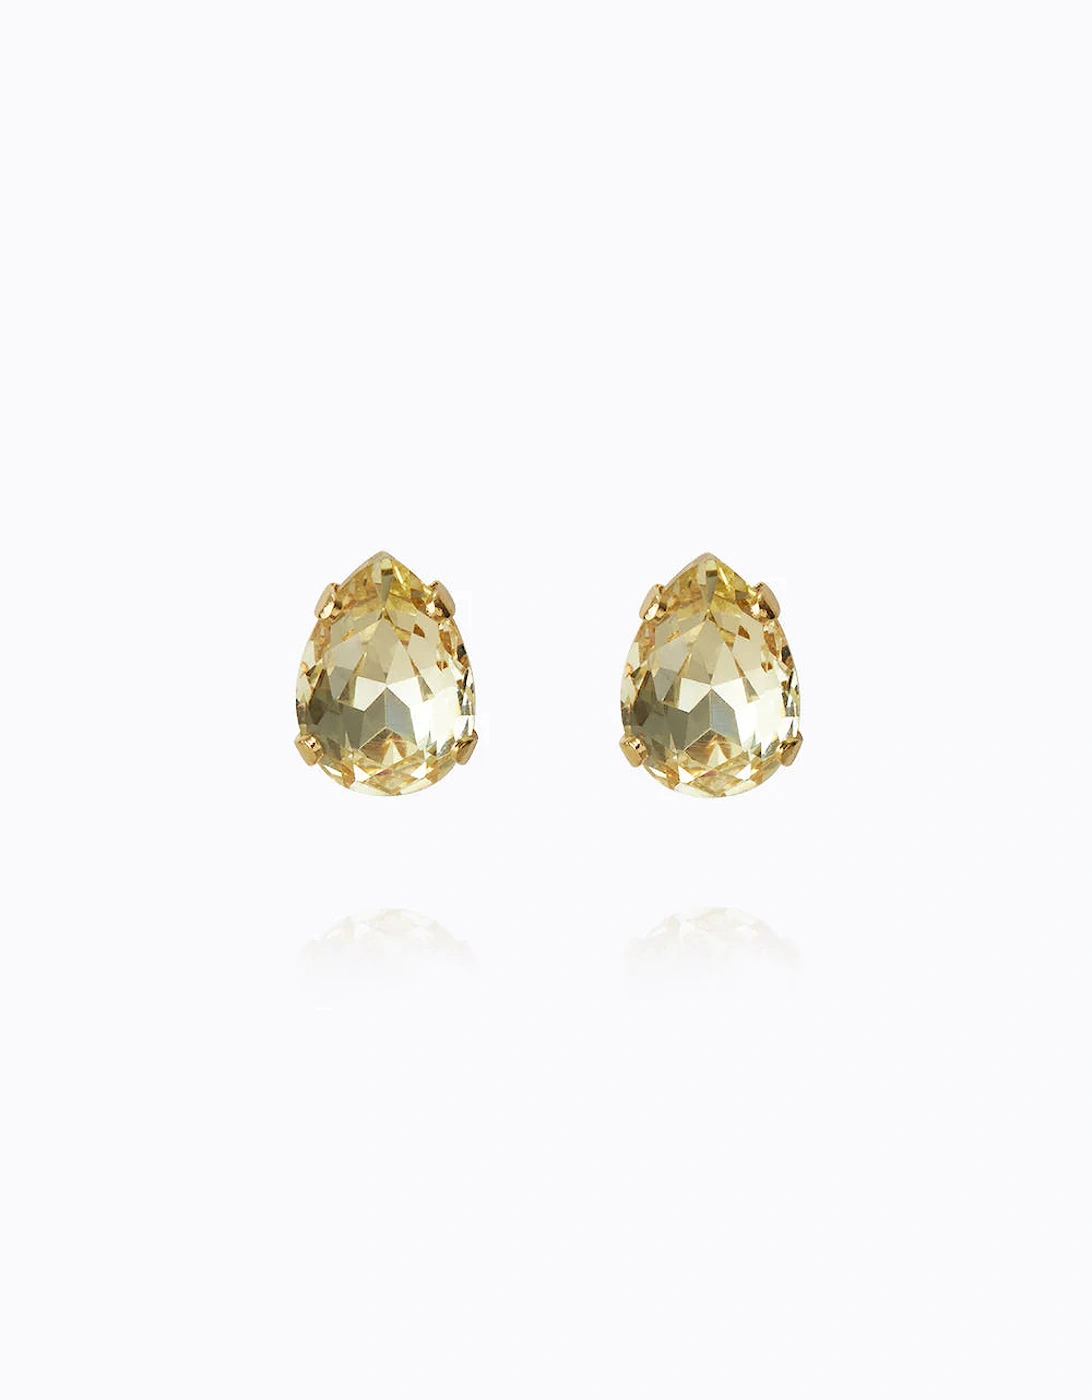 Super petite drop earrings in gold jonquil, 2 of 1